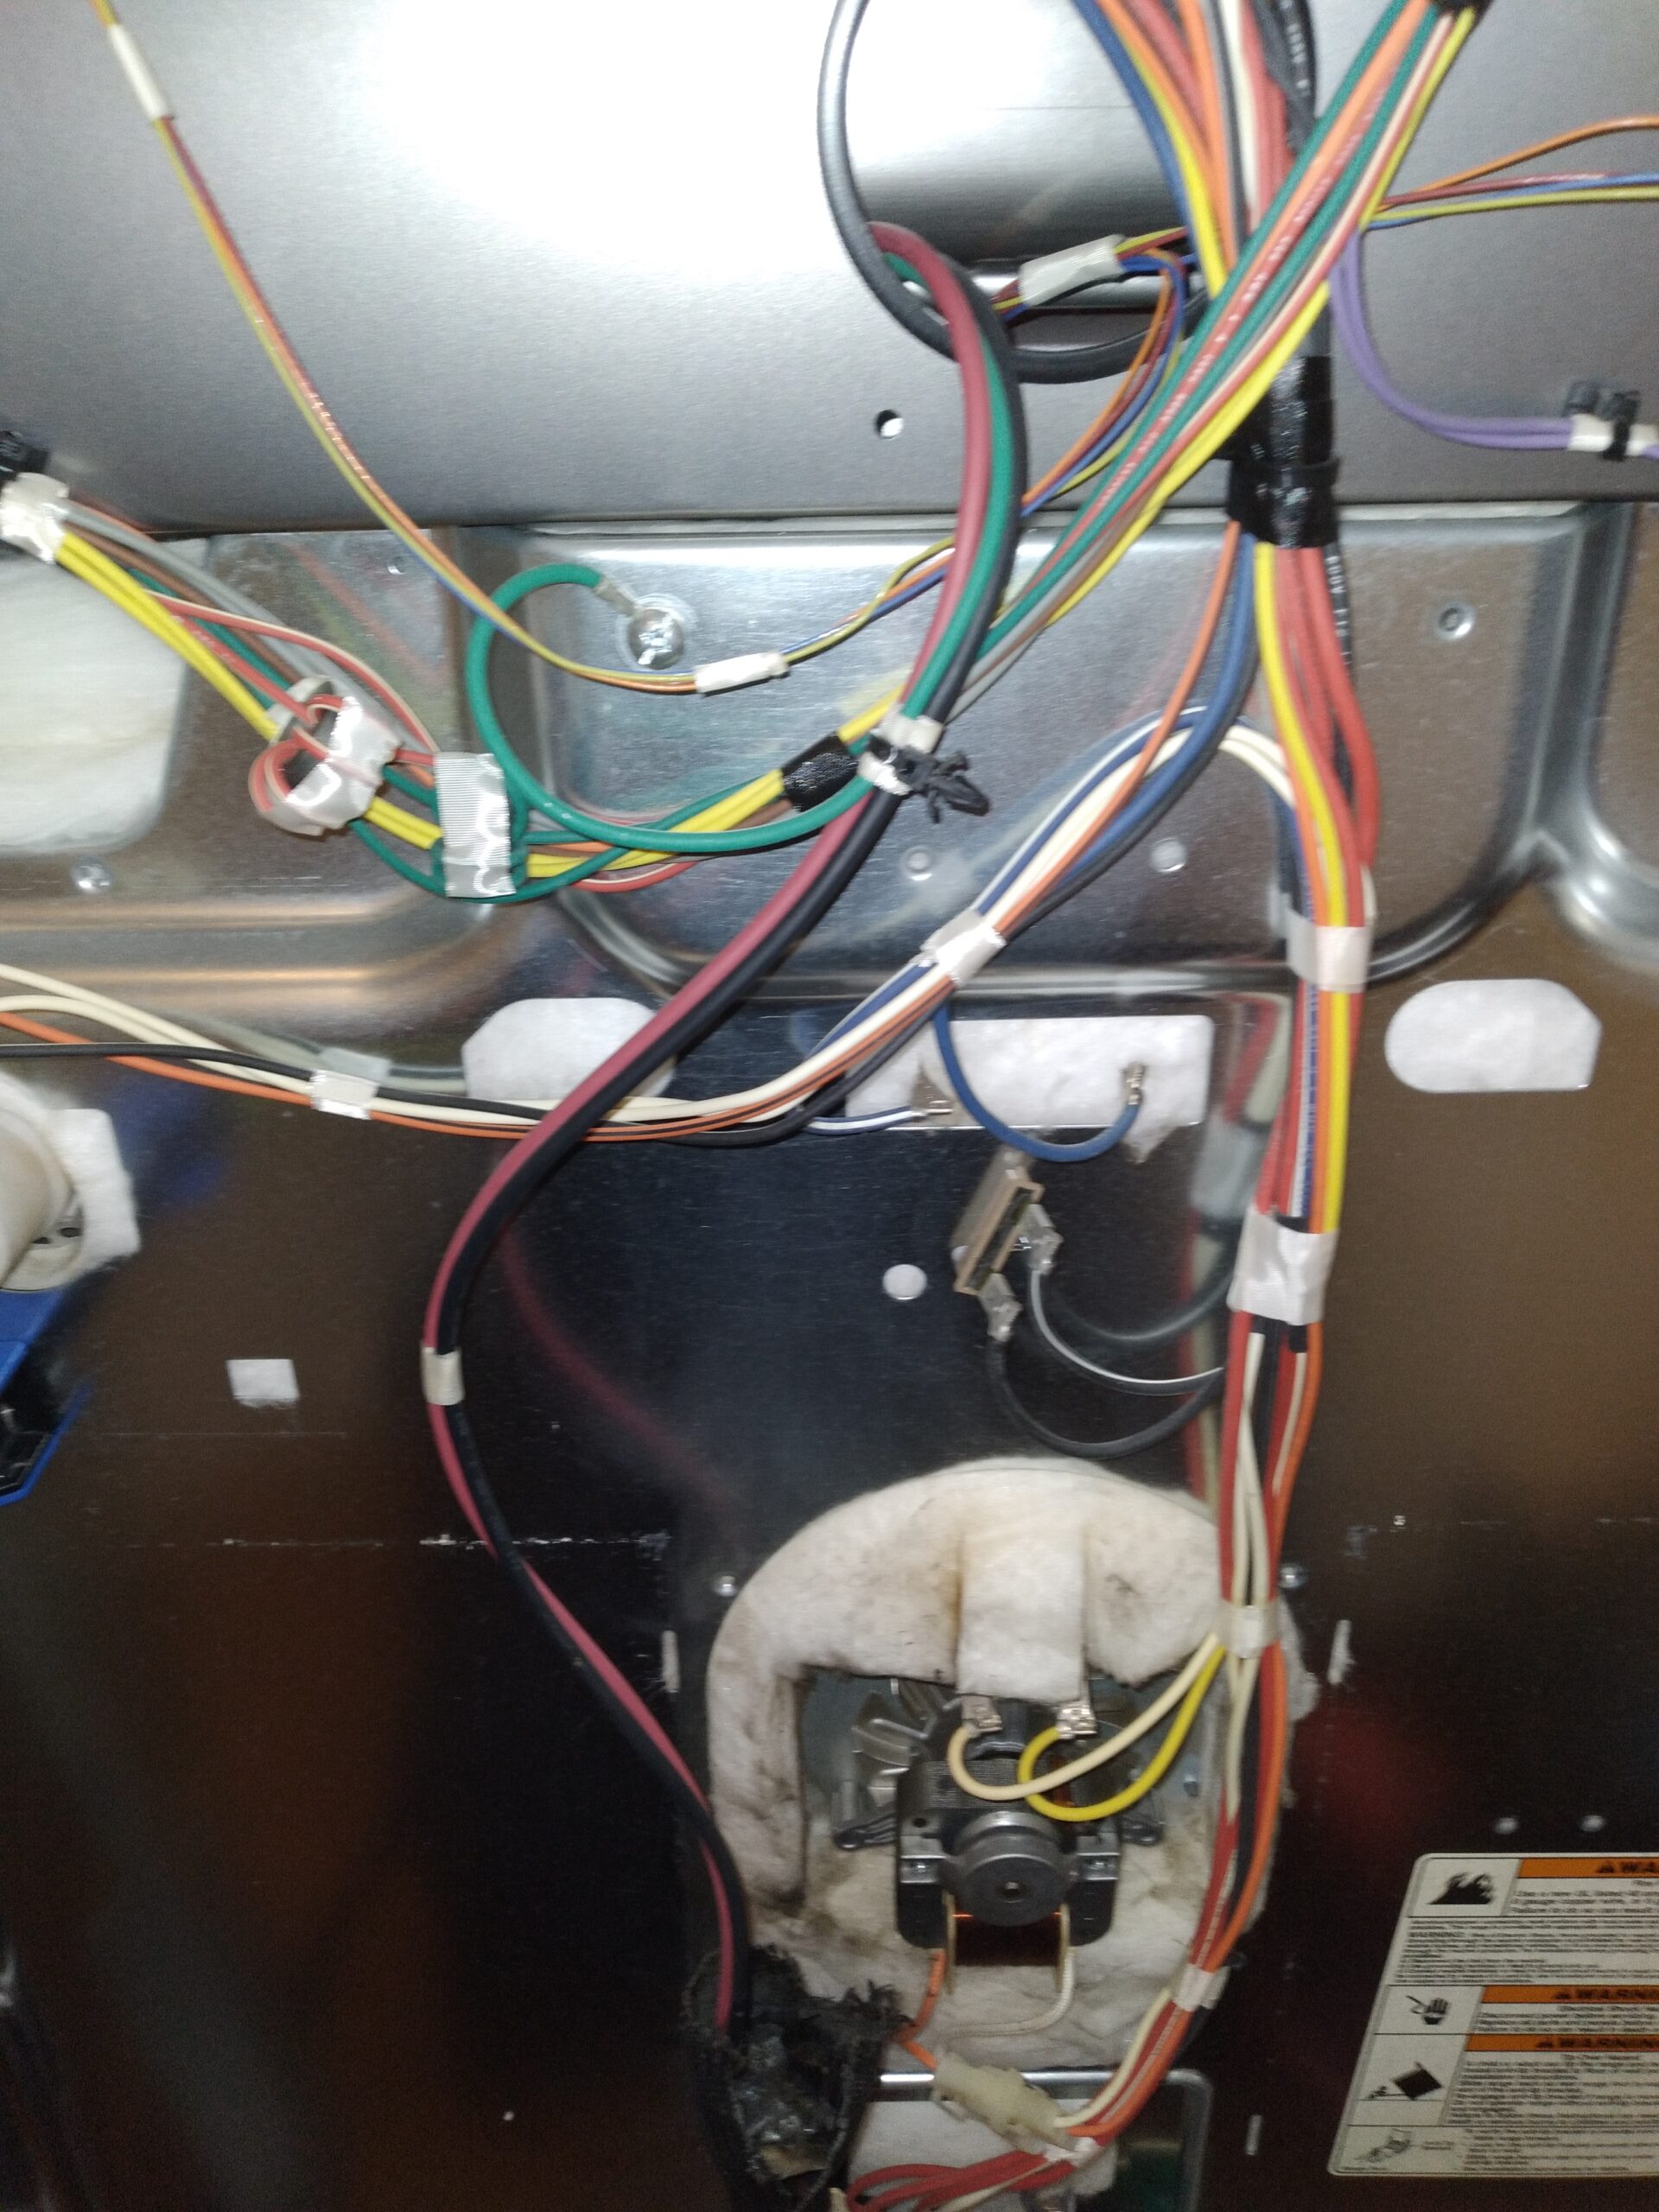 appliance repair oven repair range not heating properly s warfield ave wildwood fl 34785